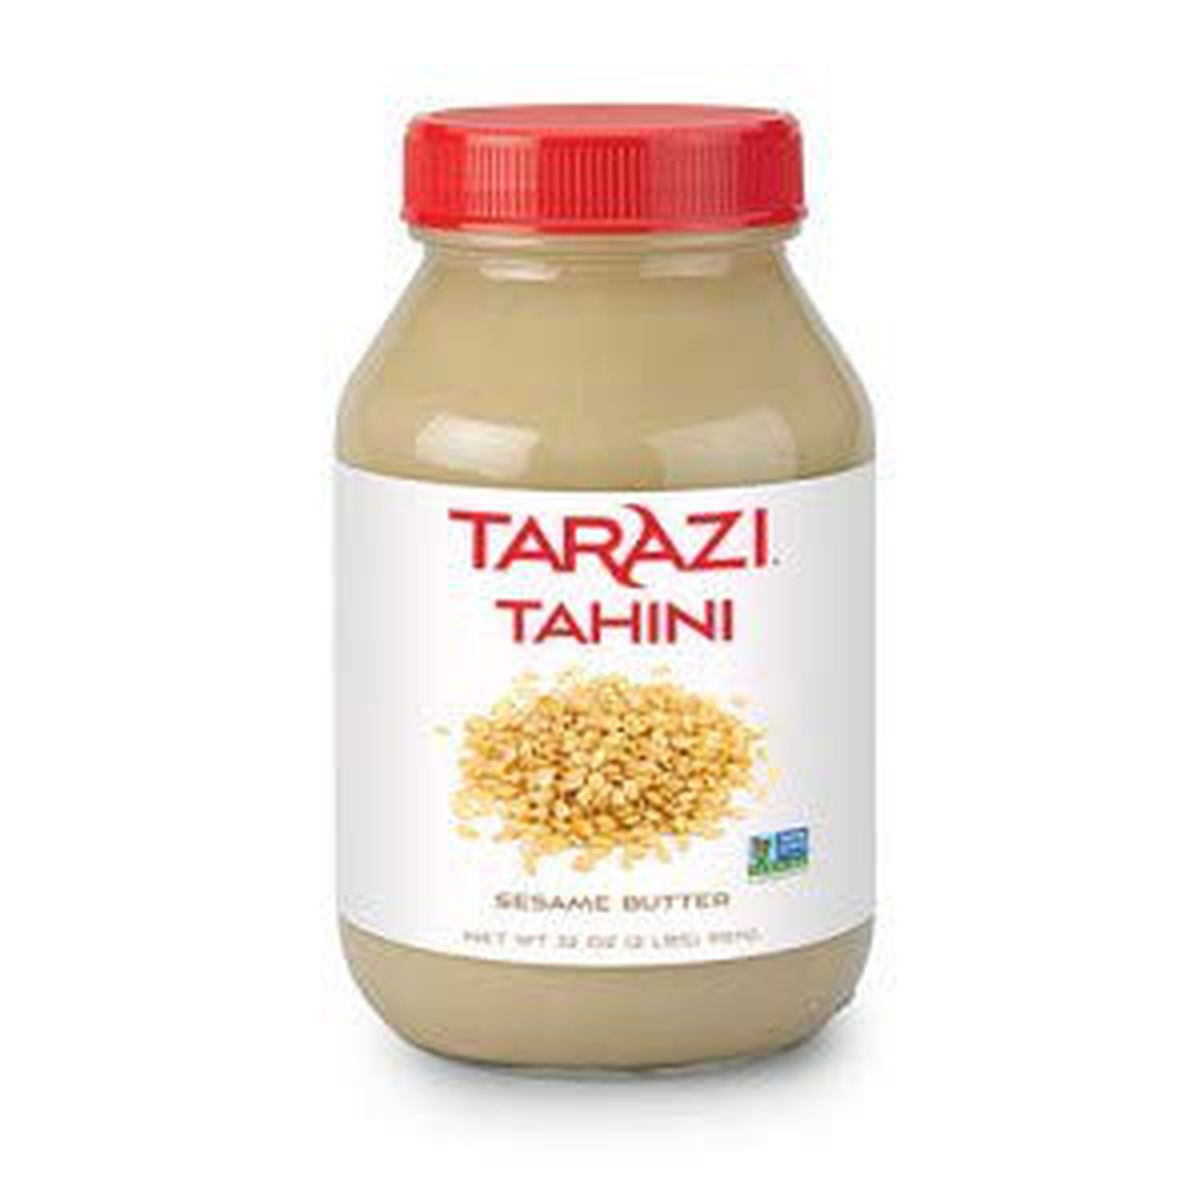 A jar of Tarazini Tahini